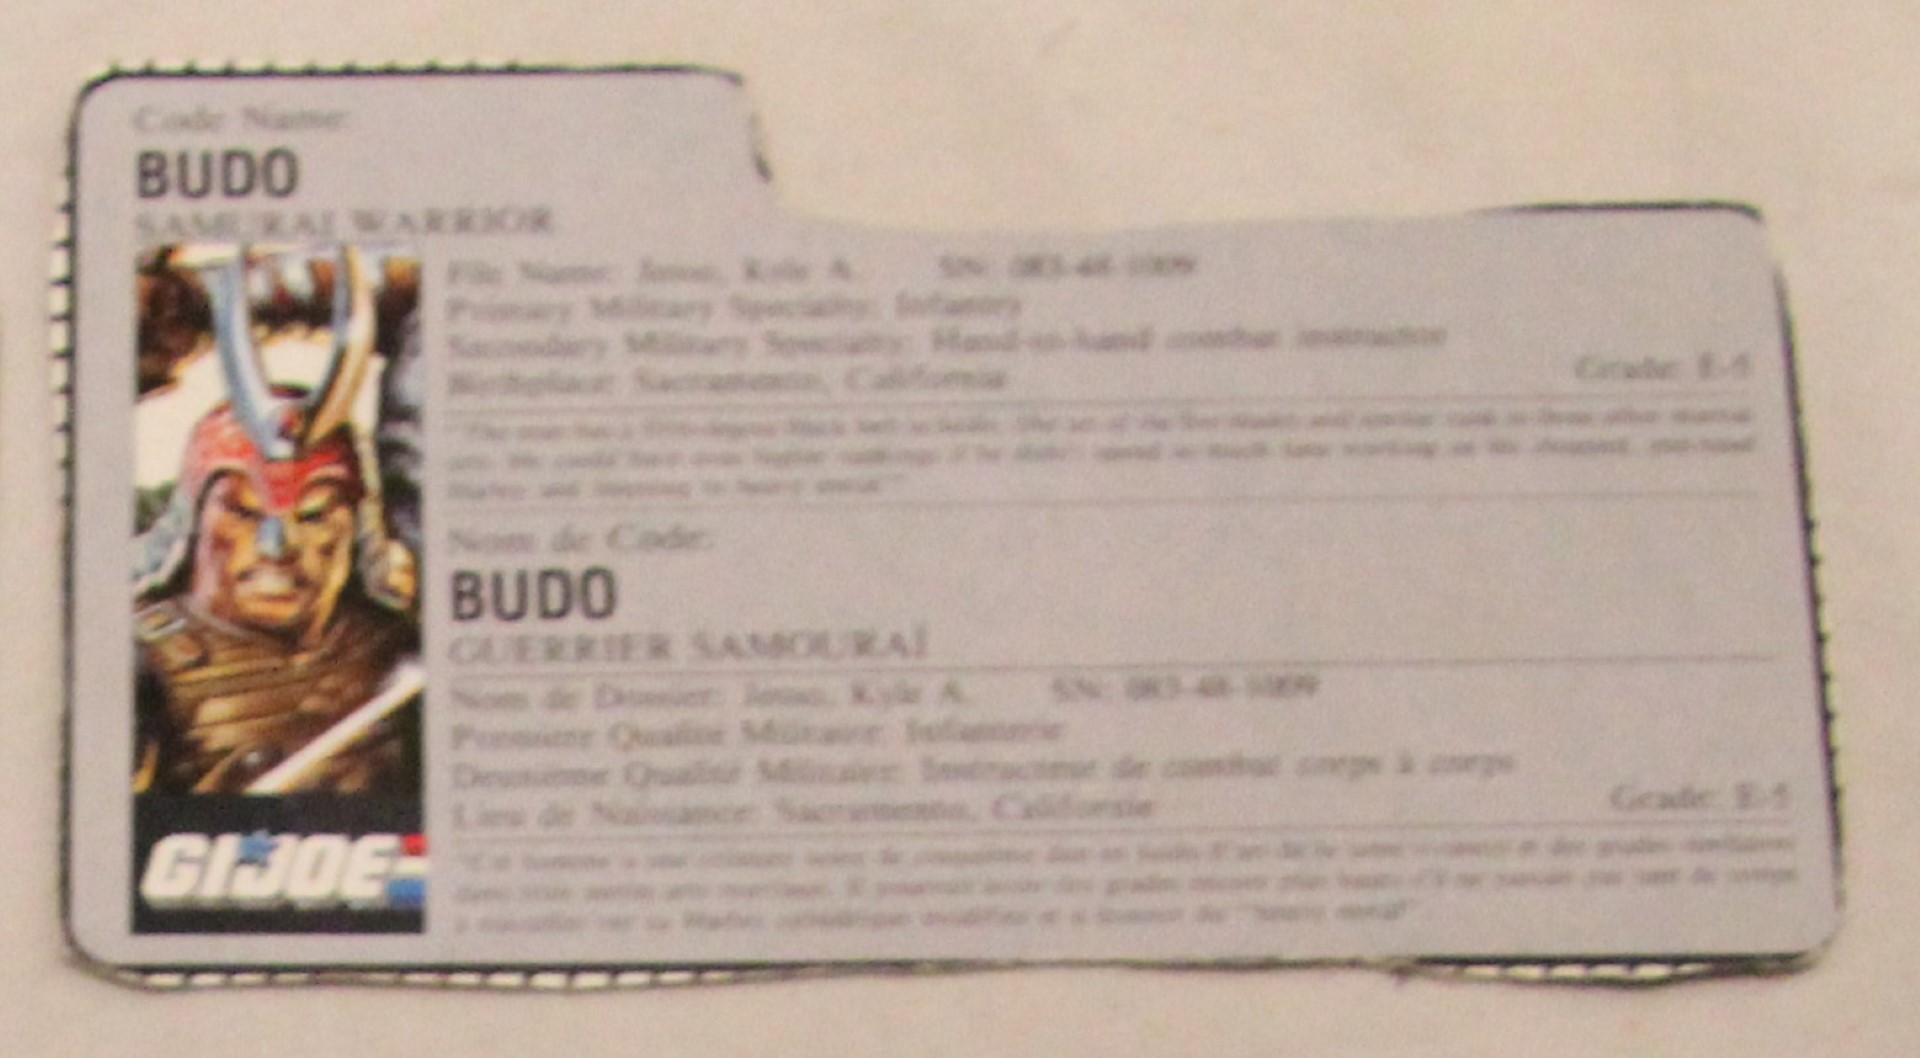 1988 budo file card